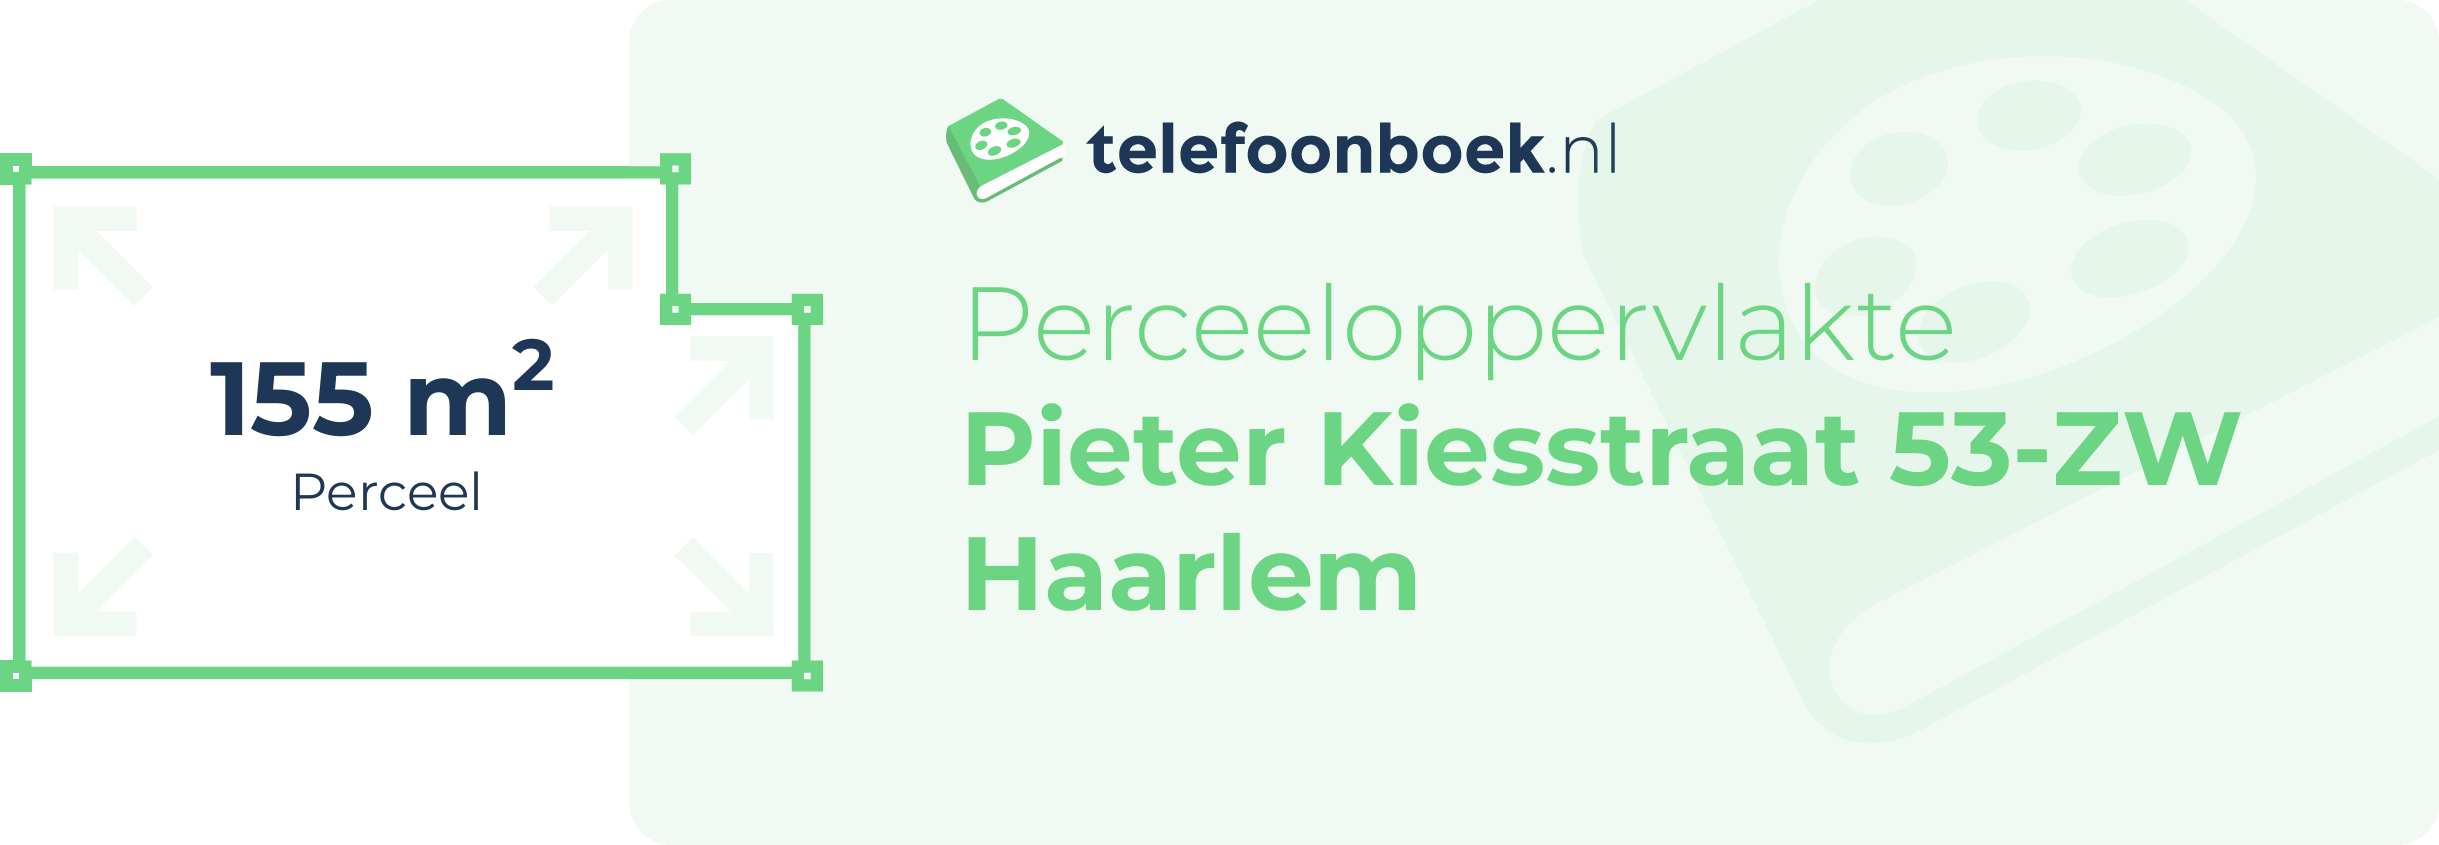 Perceeloppervlakte Pieter Kiesstraat 53-ZW Haarlem